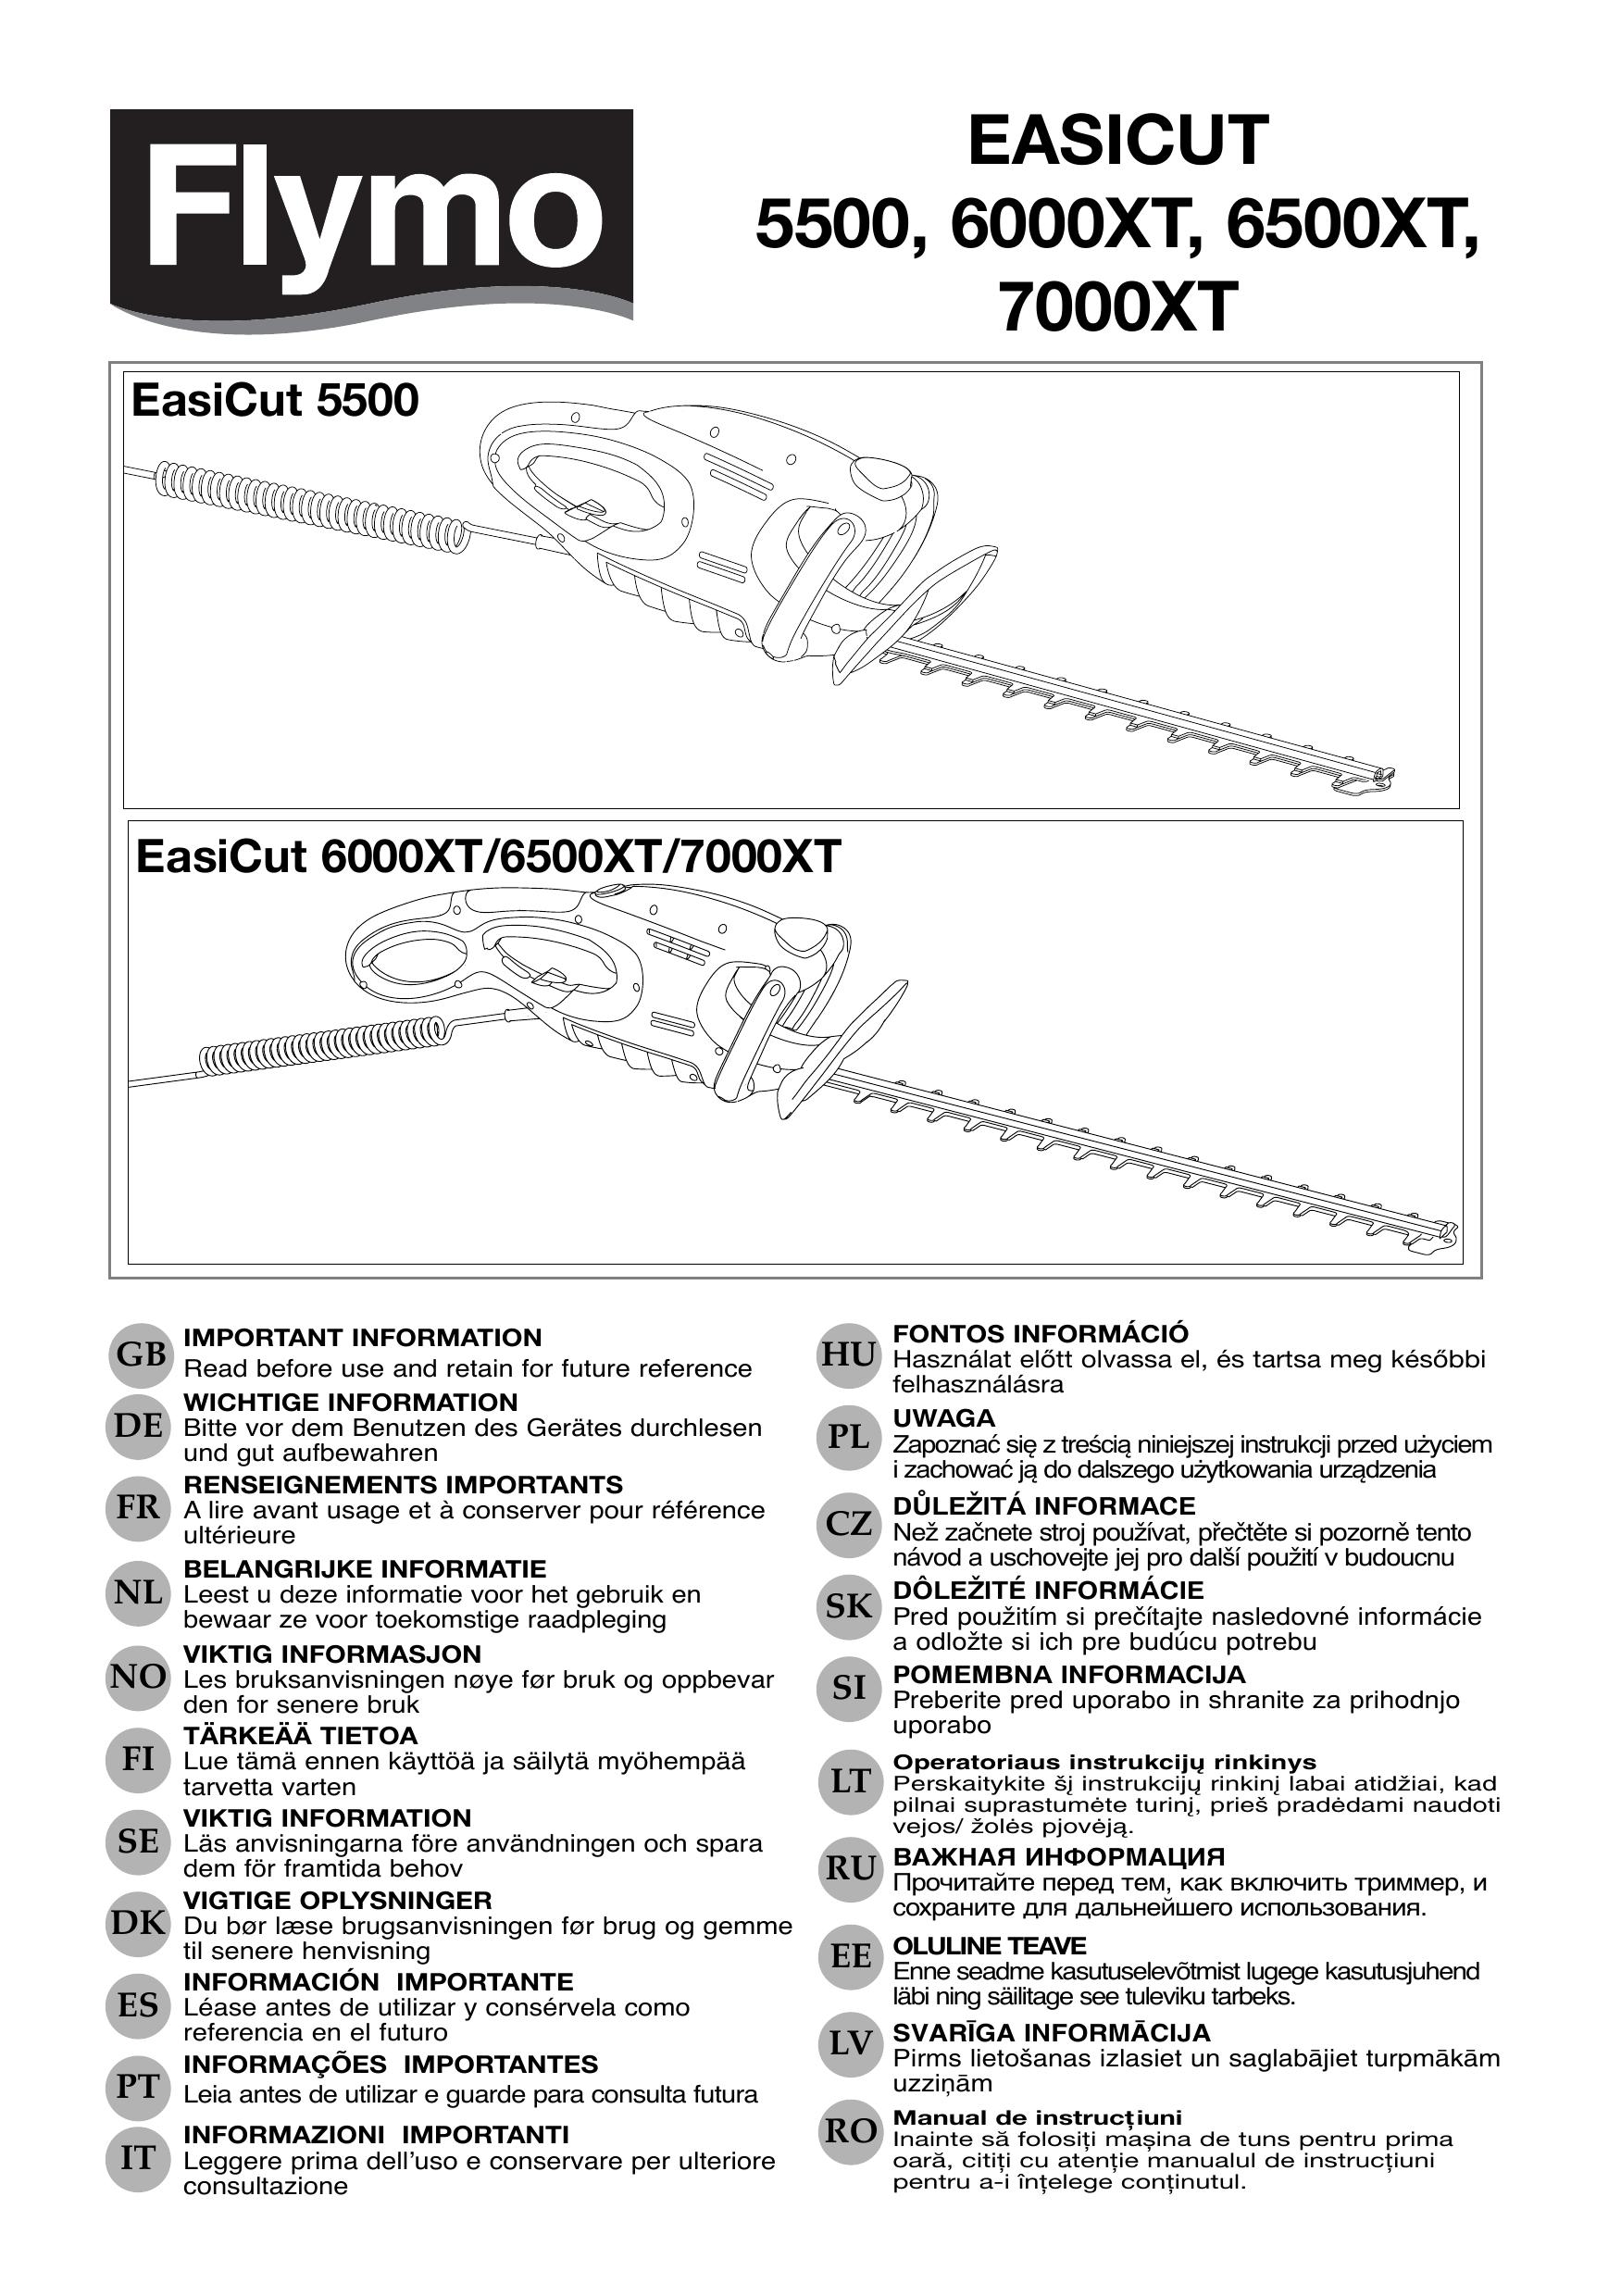 Flymo 7000XT Trimmer User Manual